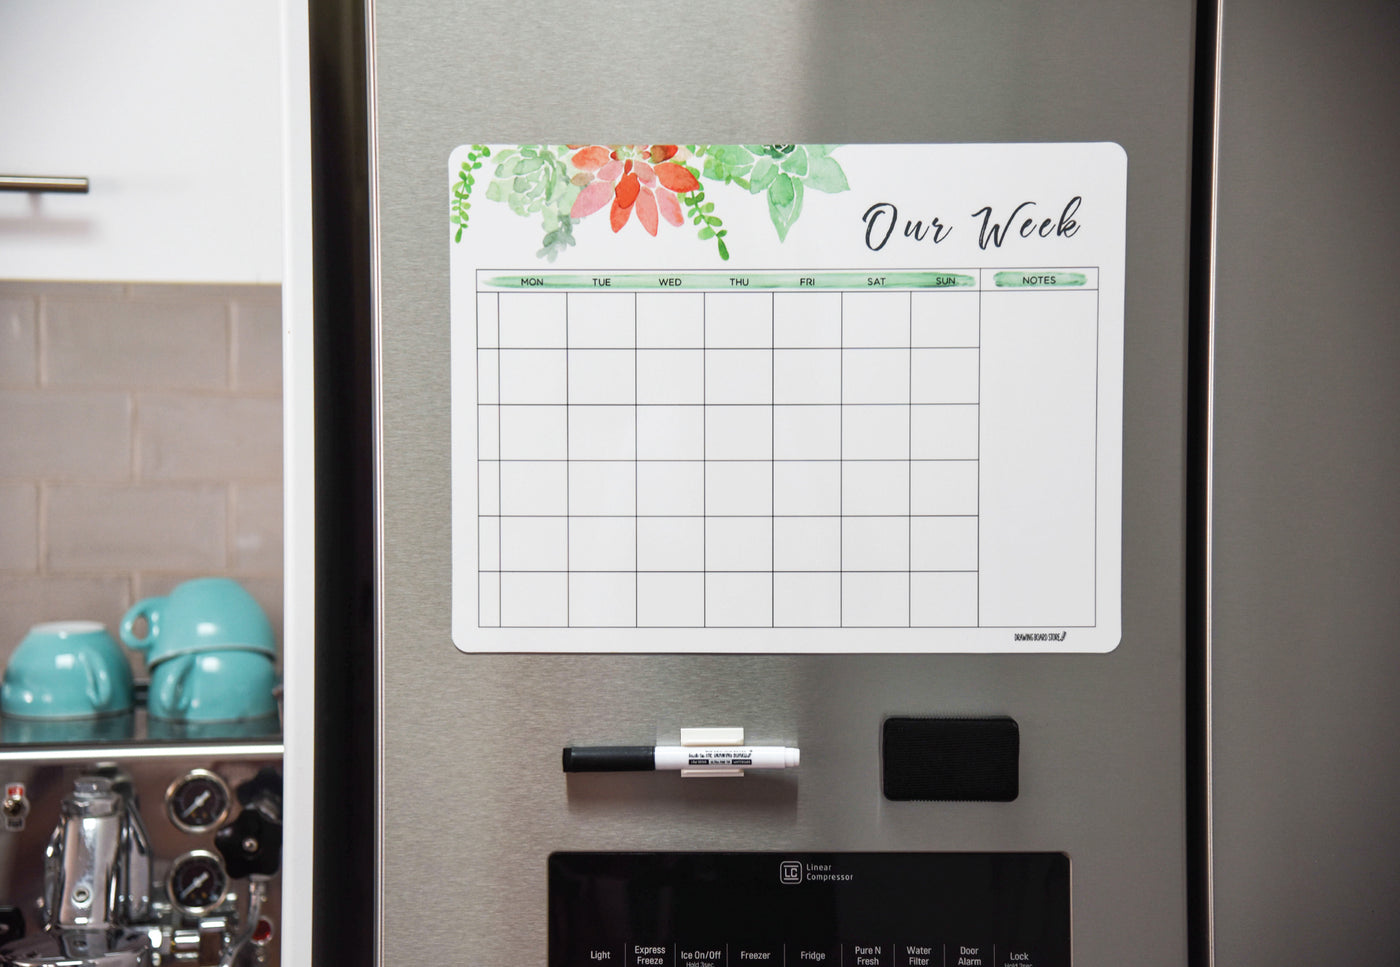 Magnetic whiteboard dry erase fridge planner calendar our family week |Drawingboardstore